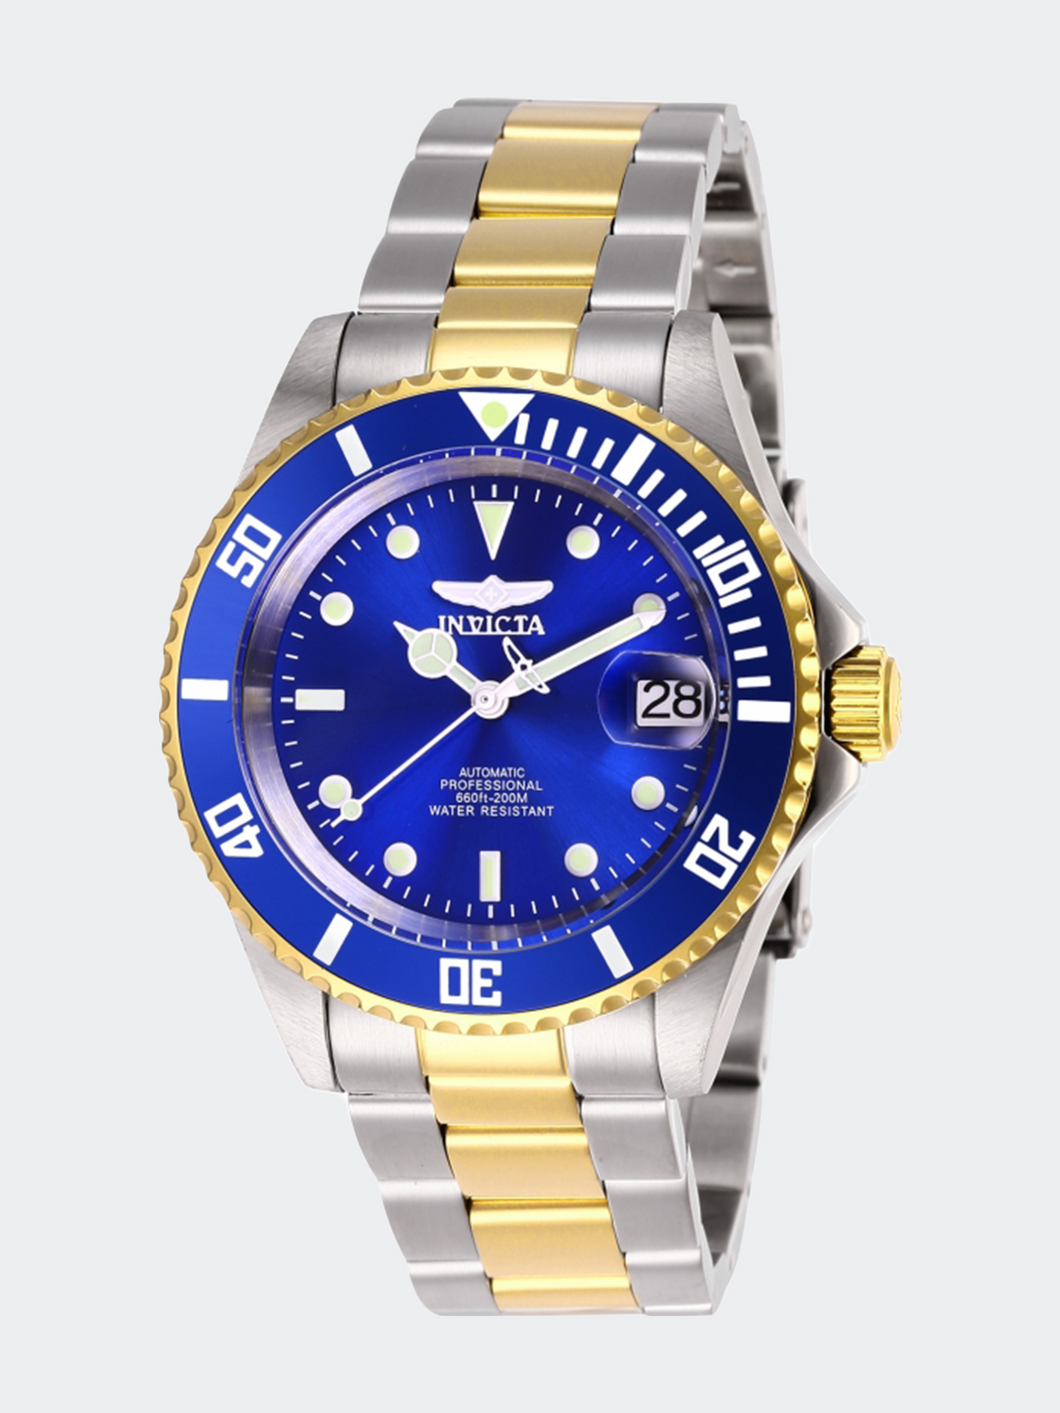 Mens 28662 Pro Diver Dress Watch